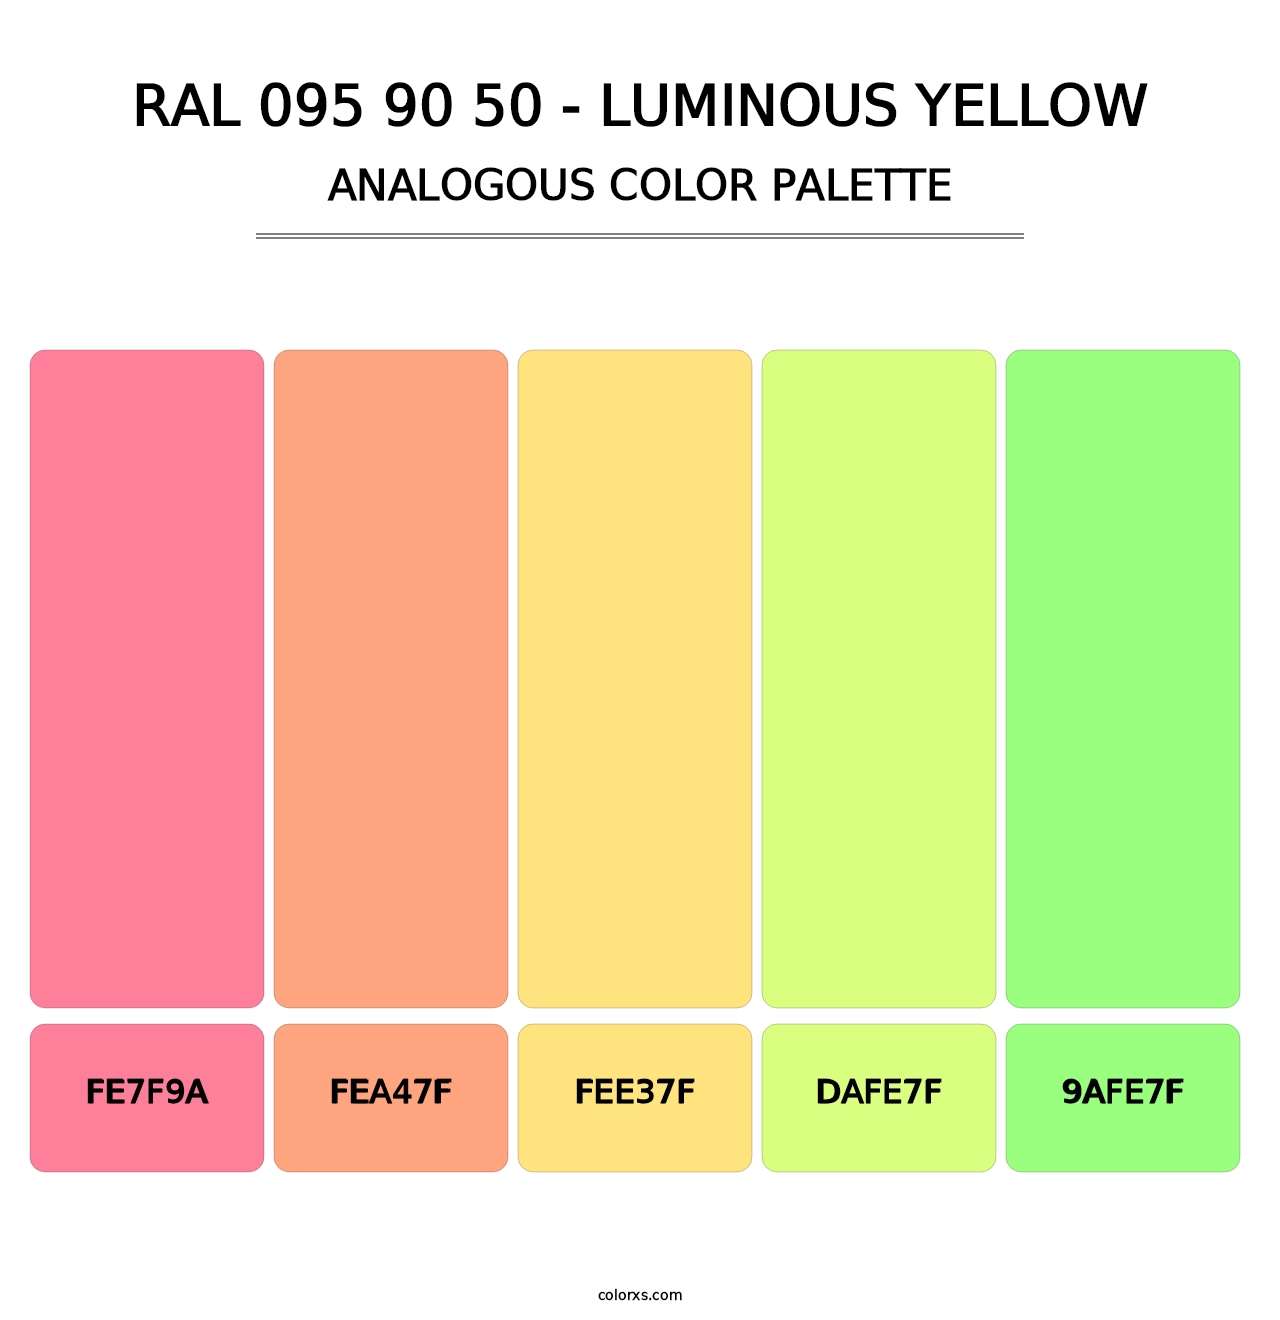 RAL 095 90 50 - Luminous Yellow - Analogous Color Palette